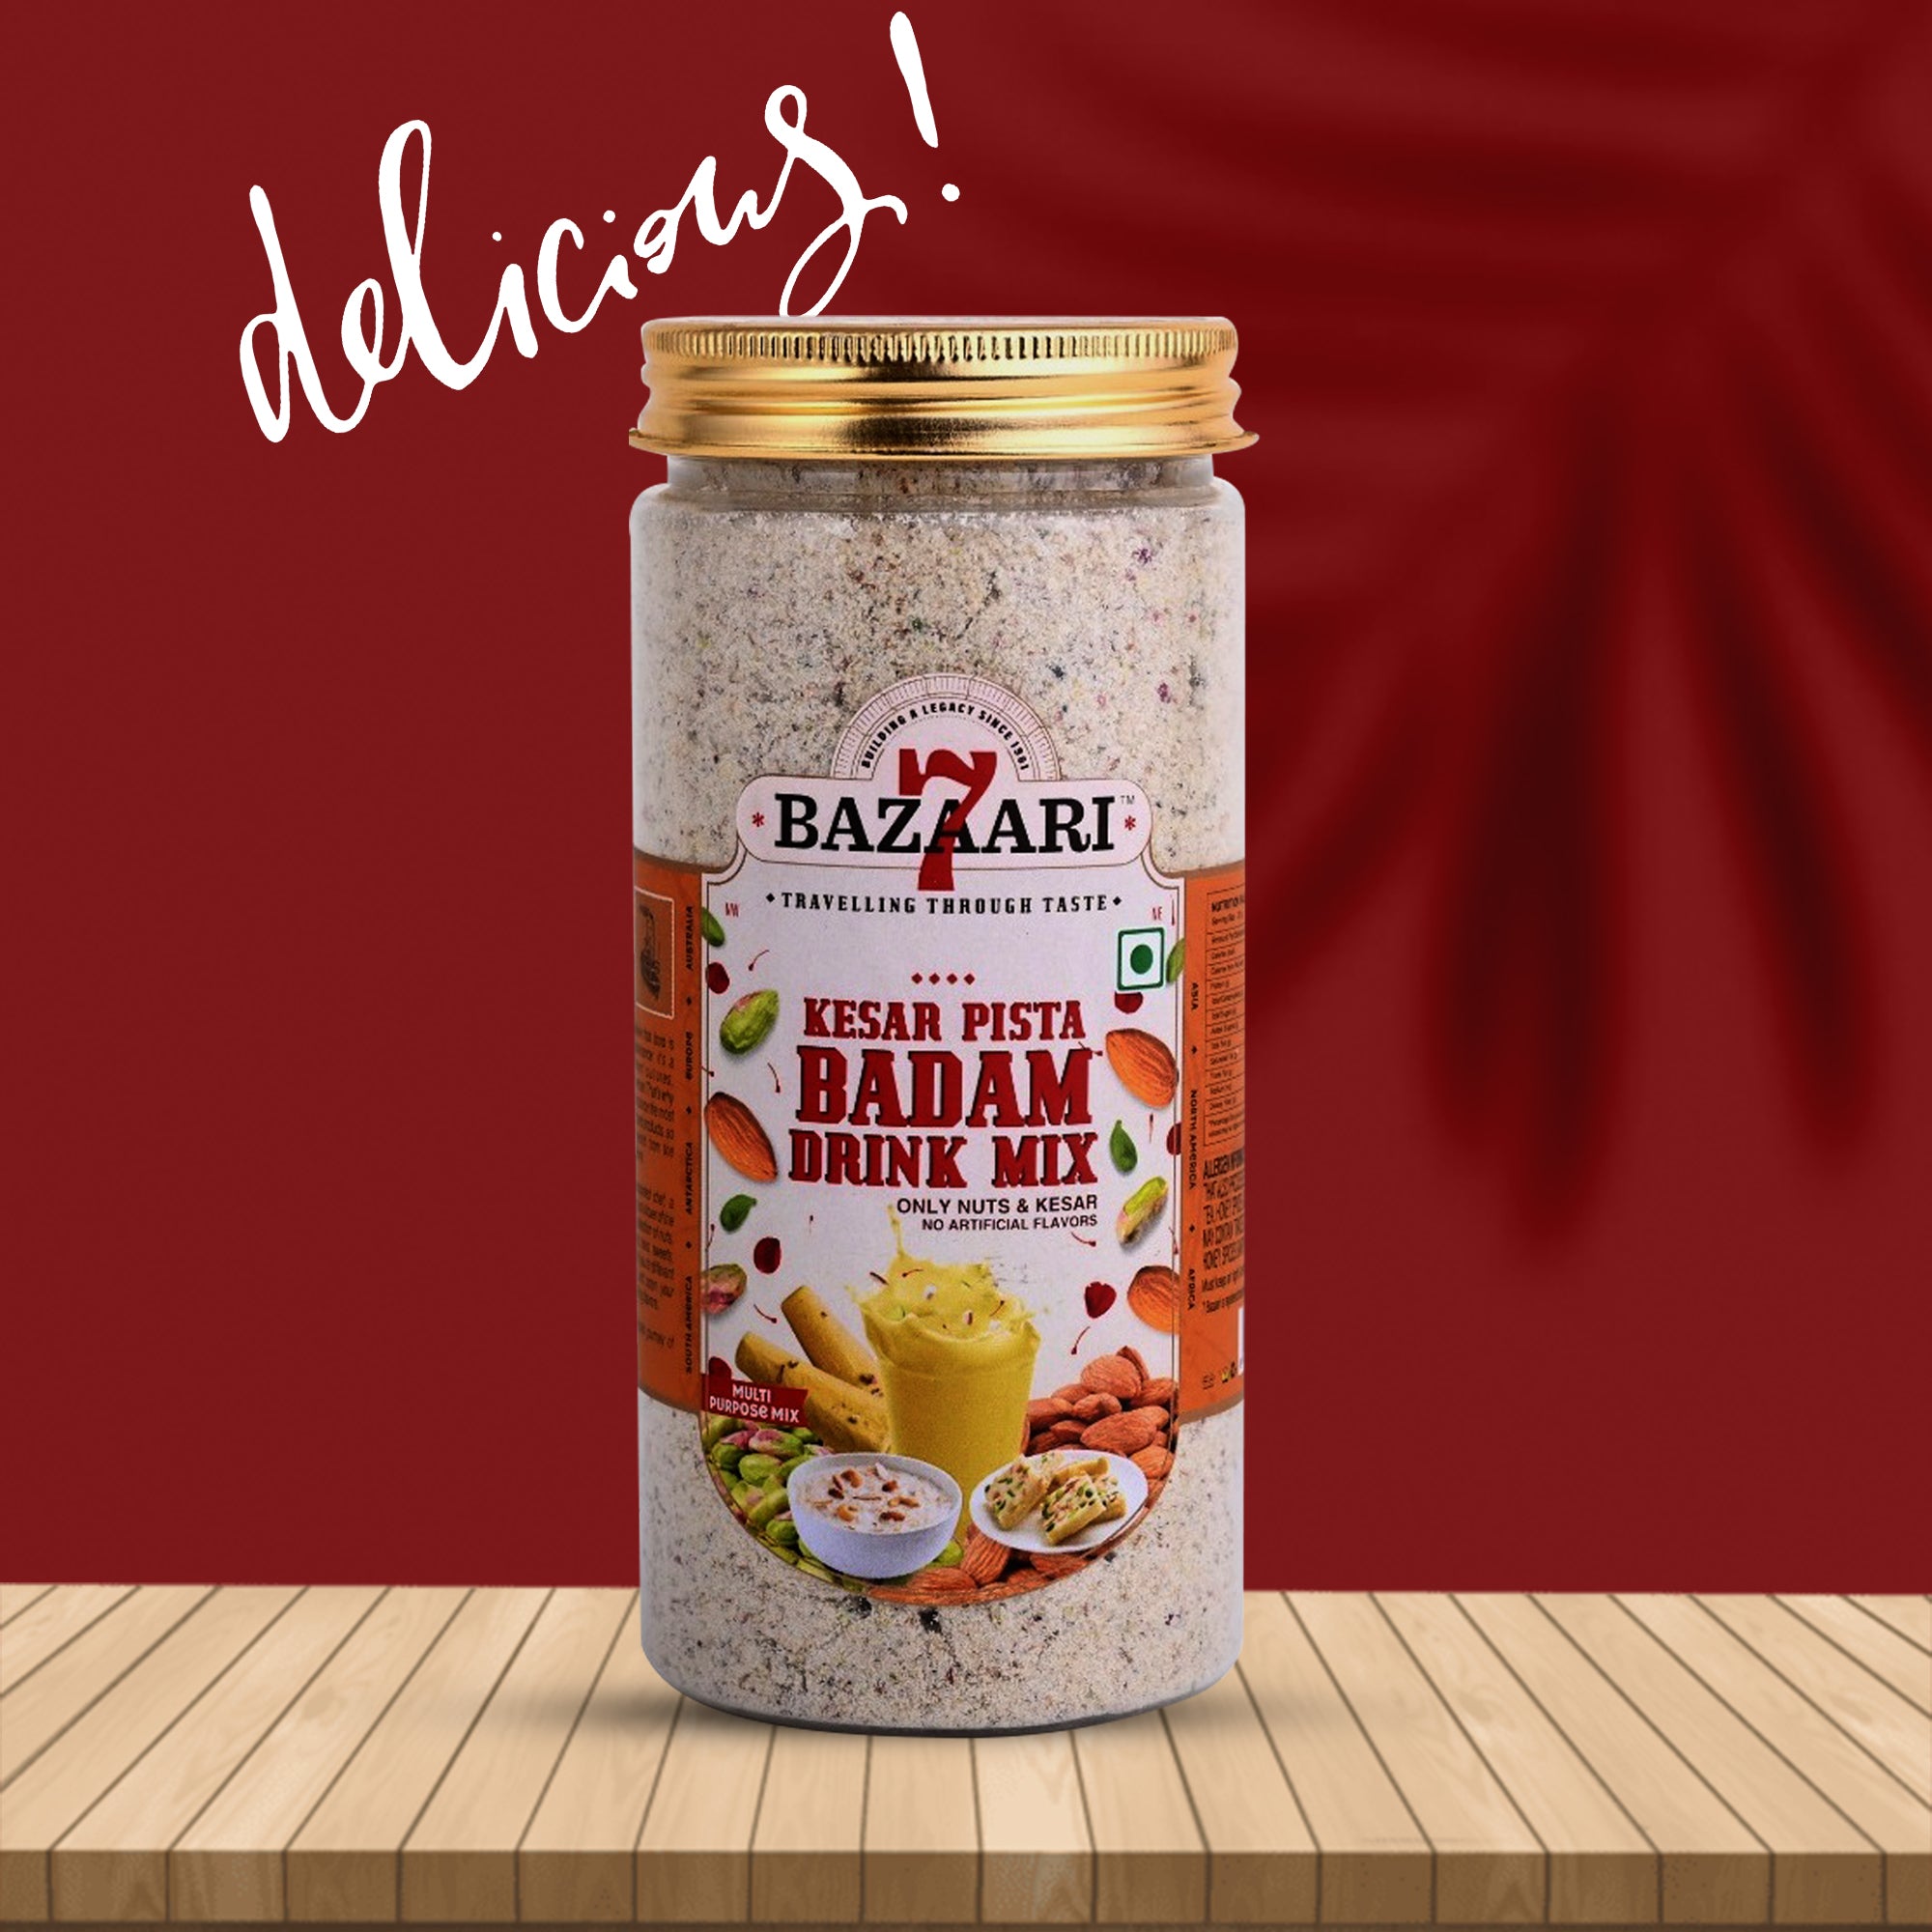 Premium KESAR PISTA BADAM DRINK MIX - Rich Blend of Saffron, Almonds, and Pistachios